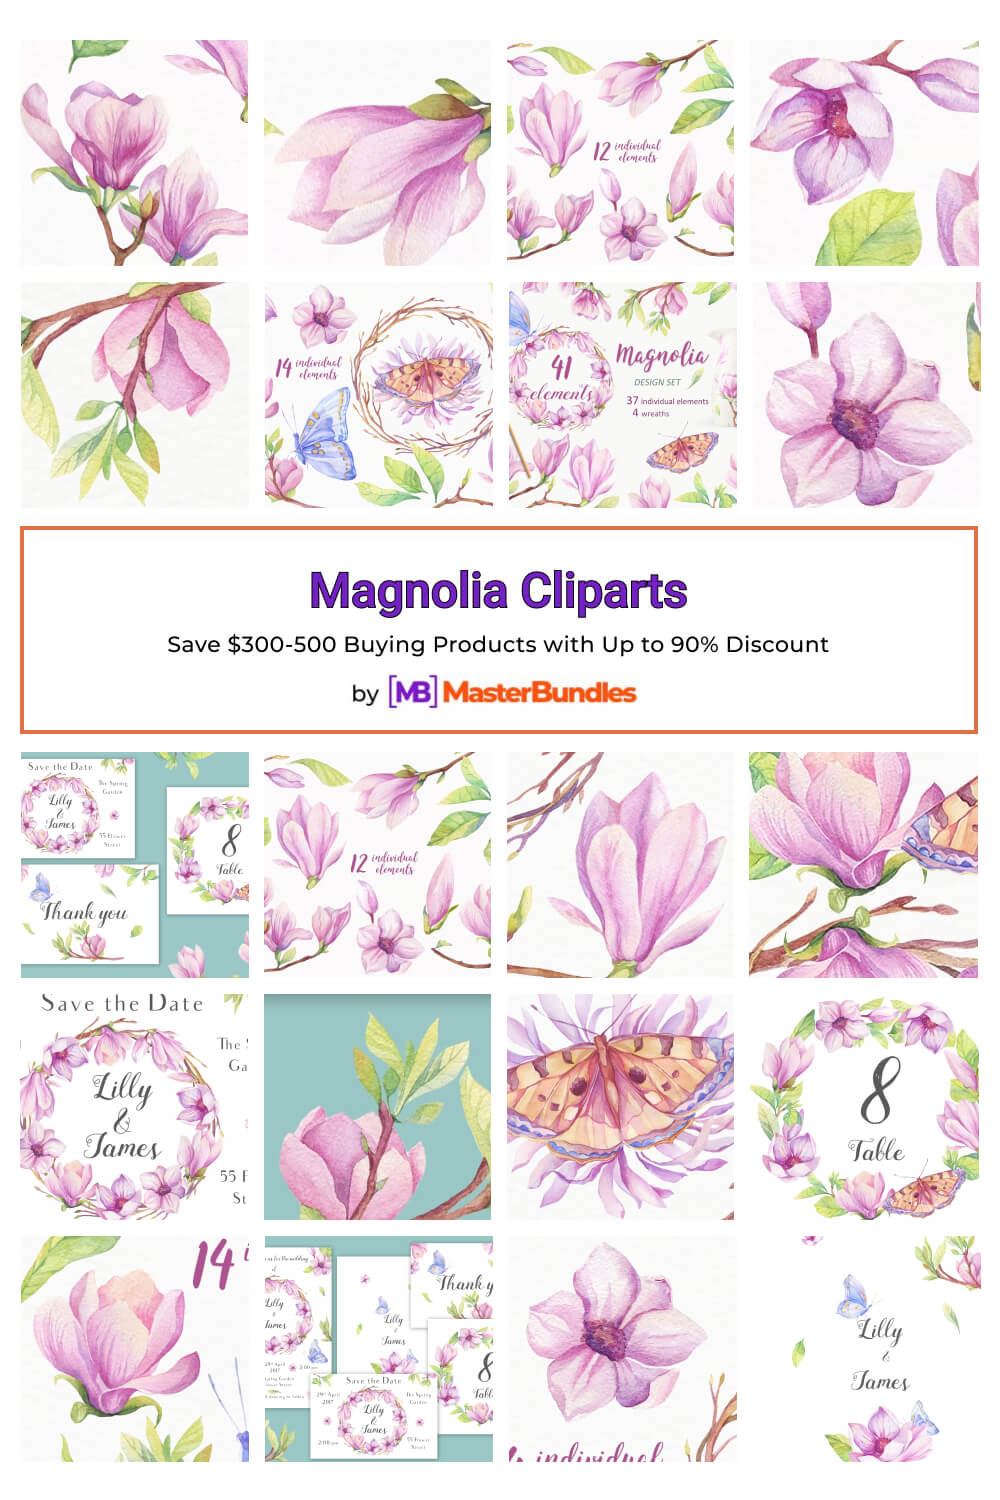 magnolia cliparts pinterest image.